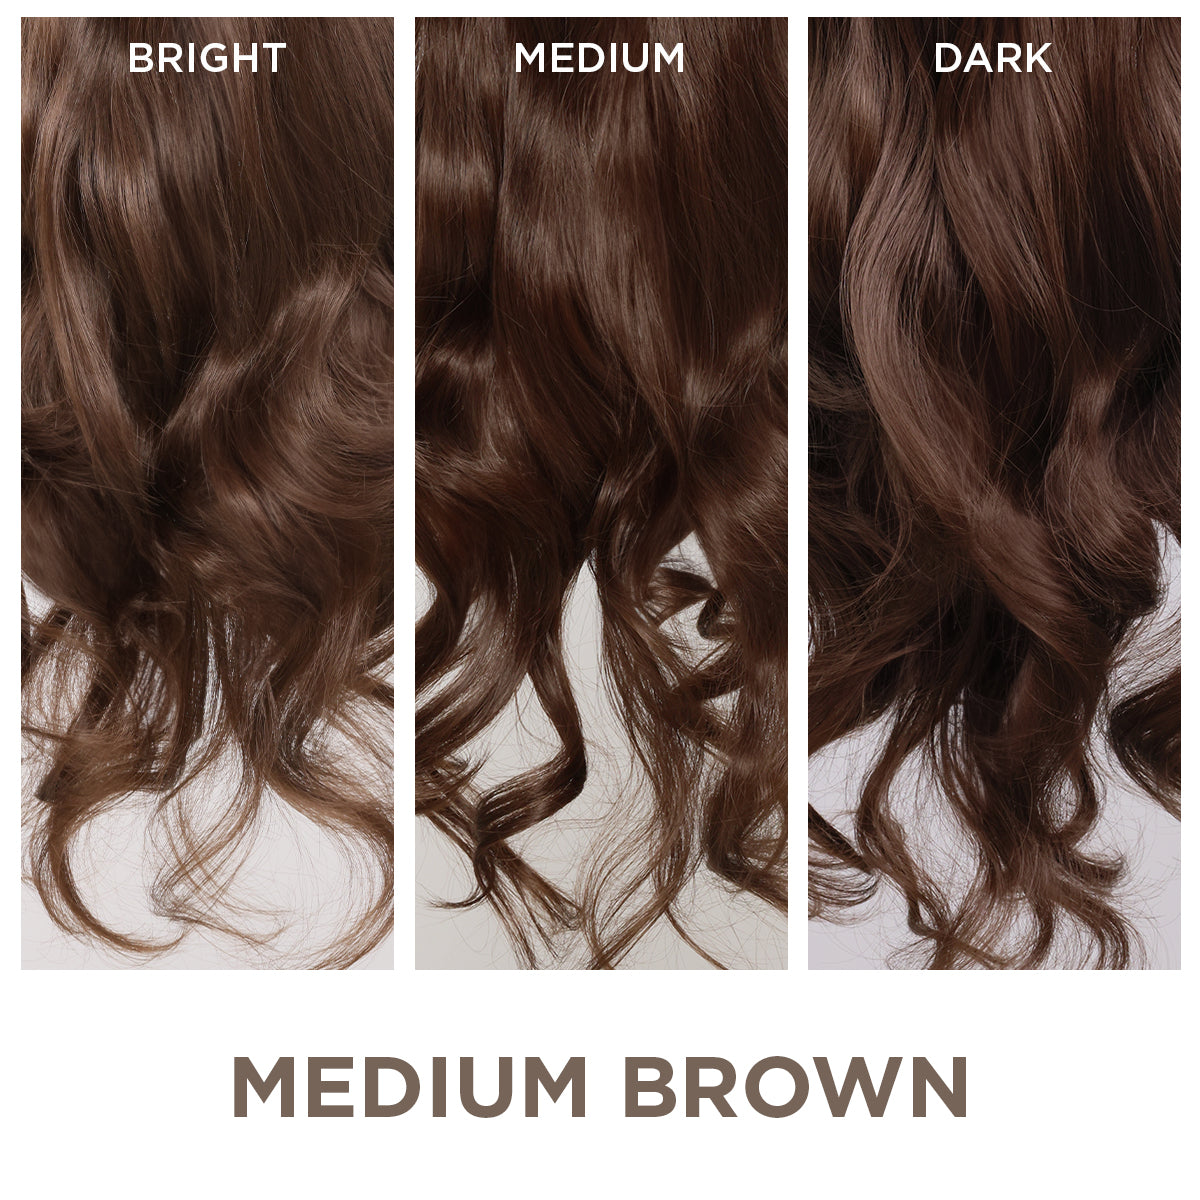 Medium Brown + 1 FREE HALO